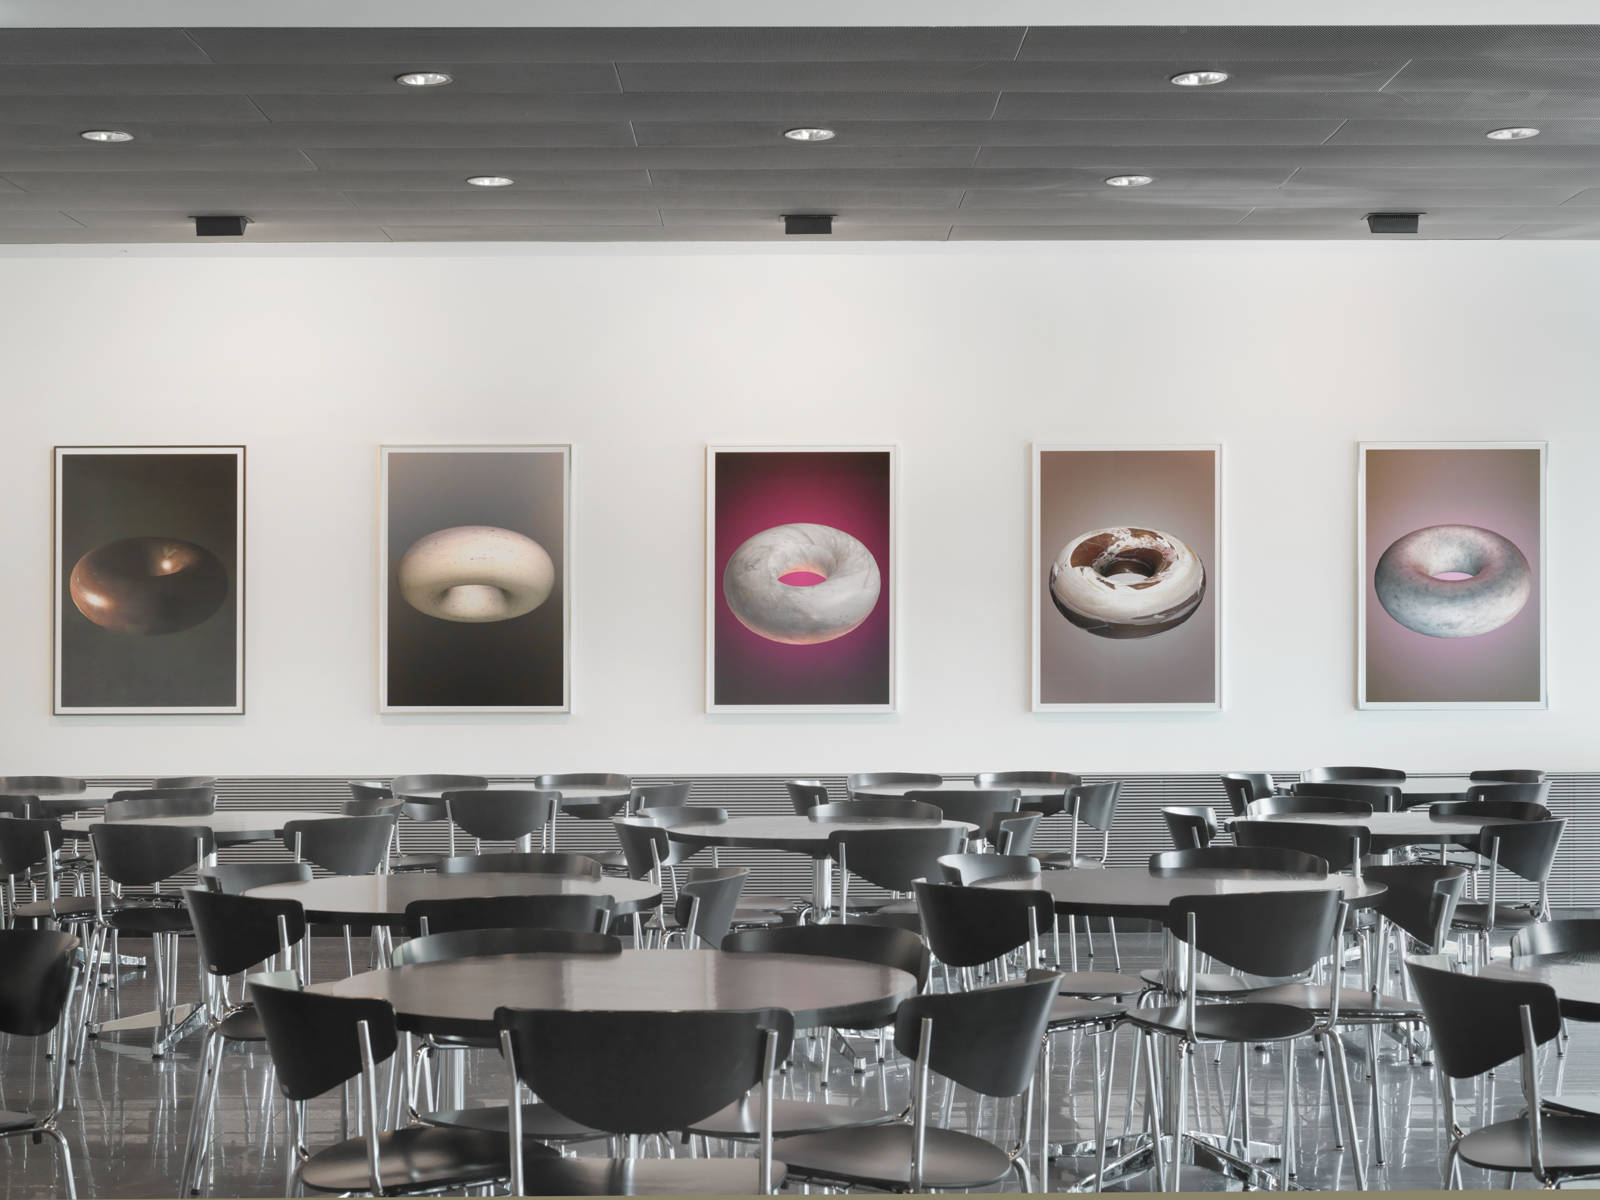 Emanuel Rosetti / Art at Swiss Re, installation view, Adliswil / 2014